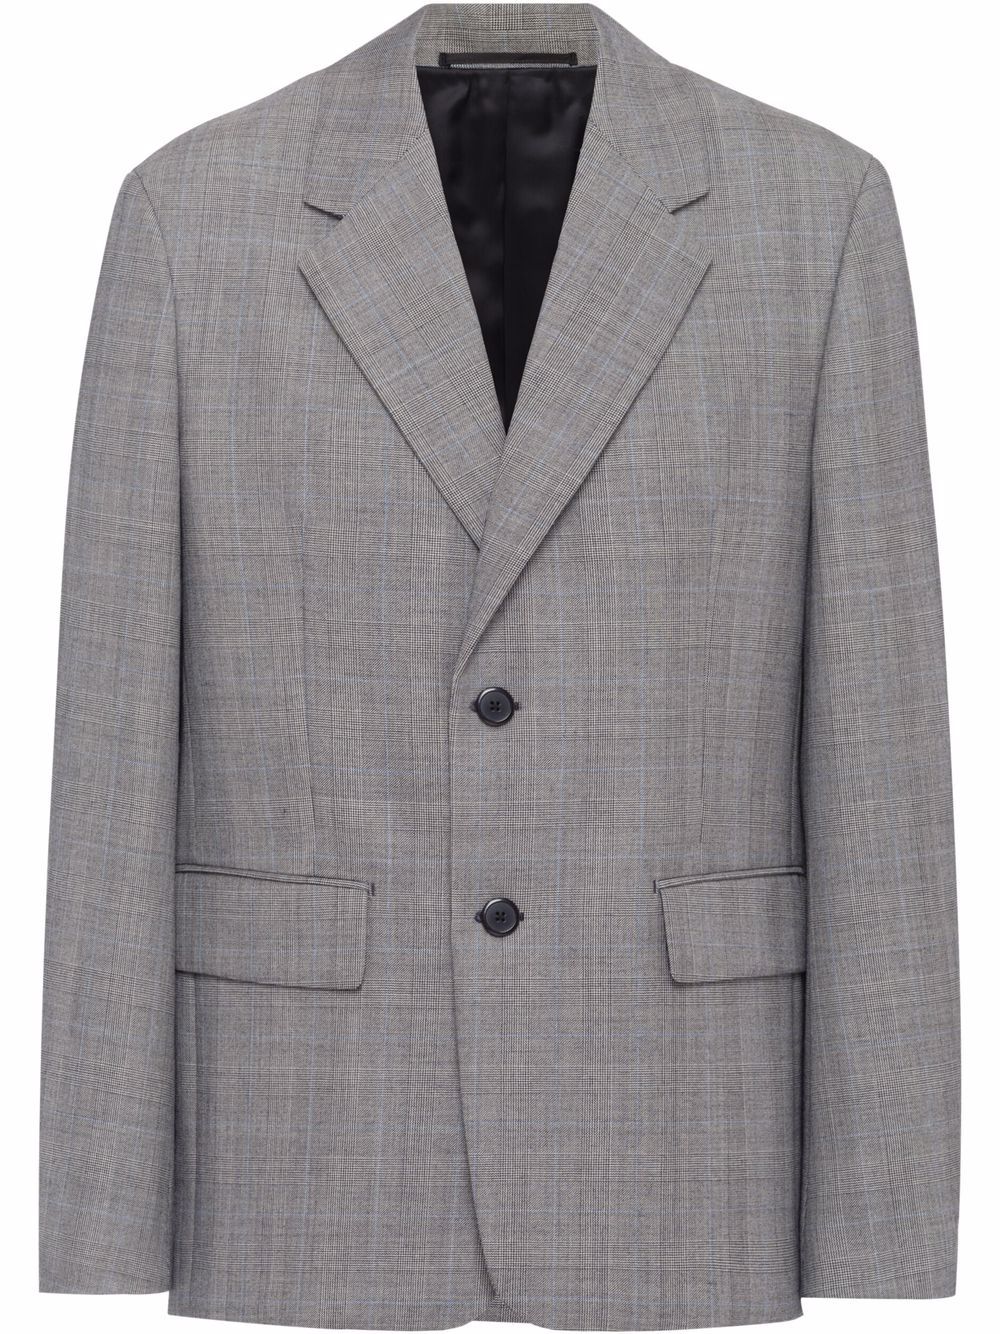 Image 1 of Prada single-breasted wool jacket